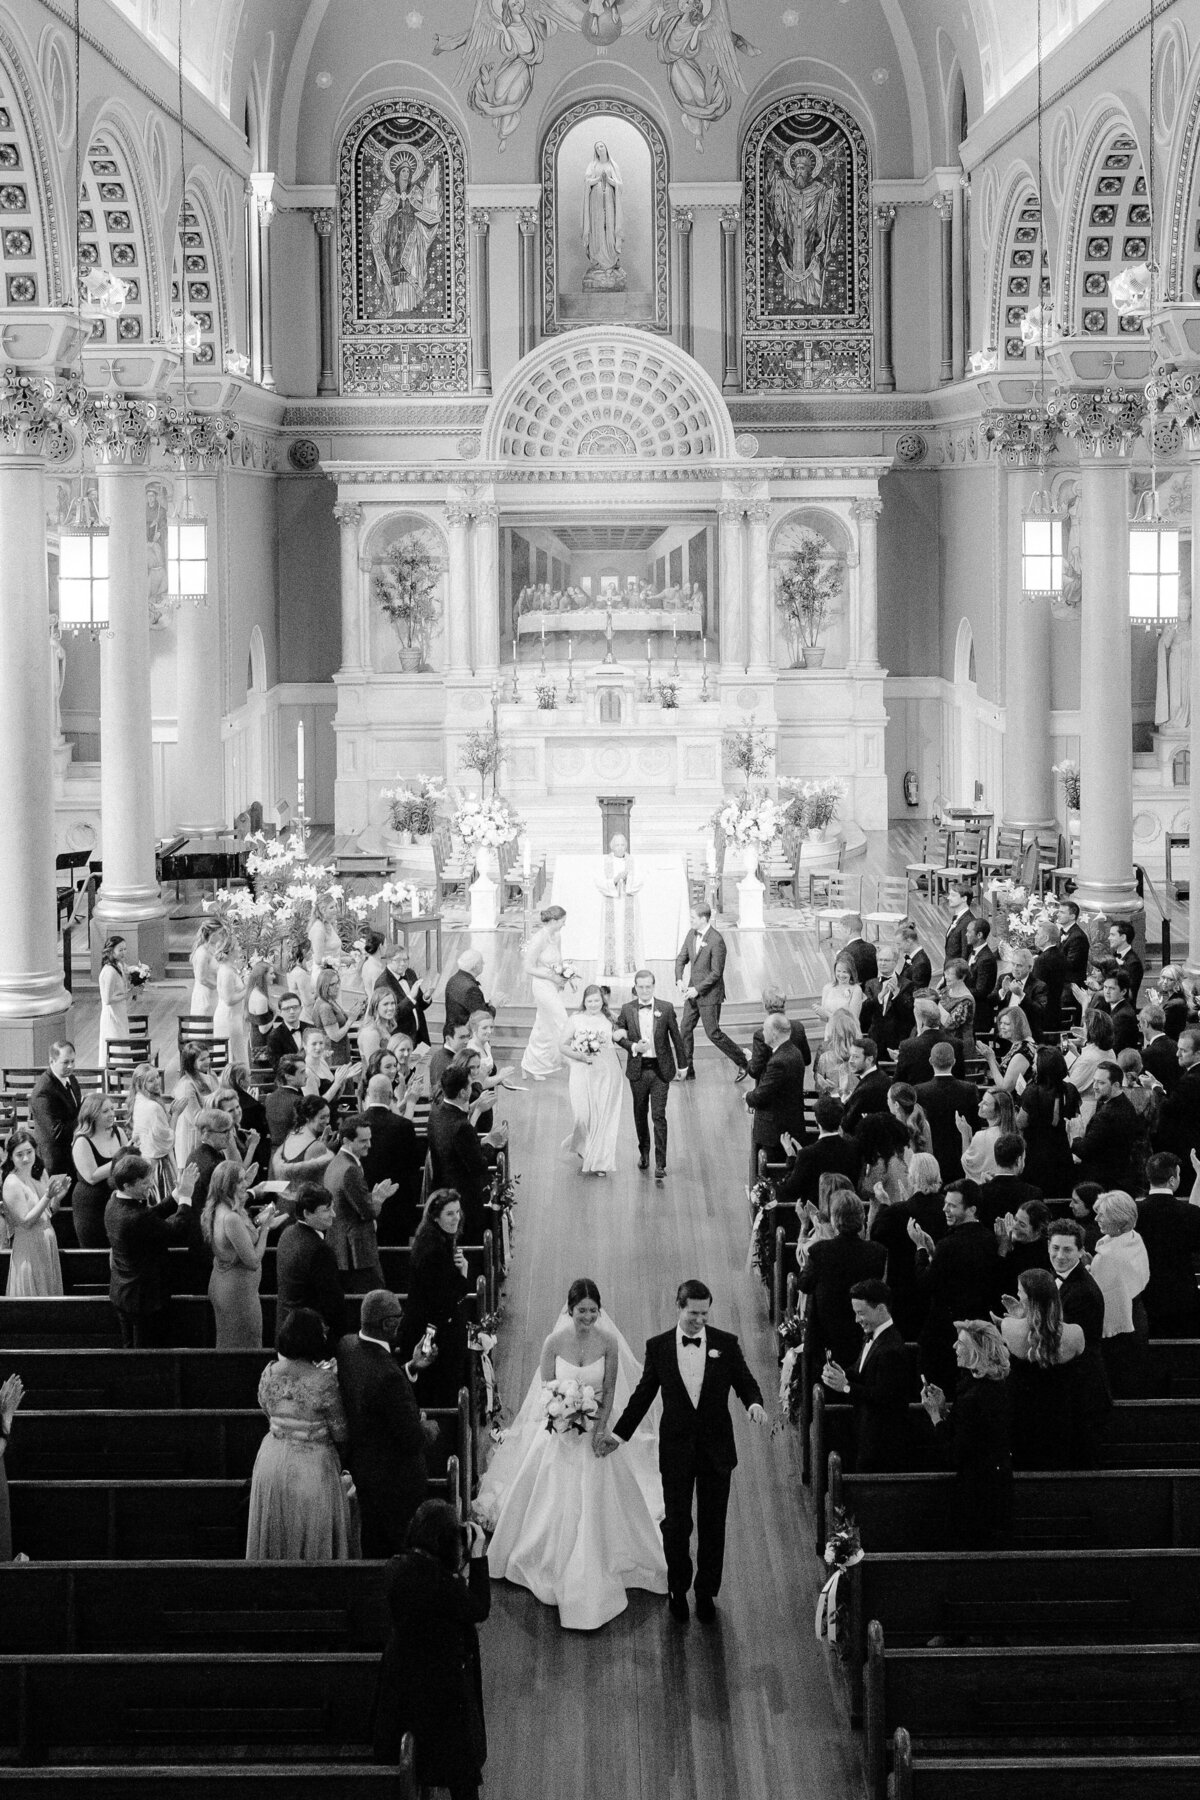 Wedding processional at St. Ceclia's Church in Boston